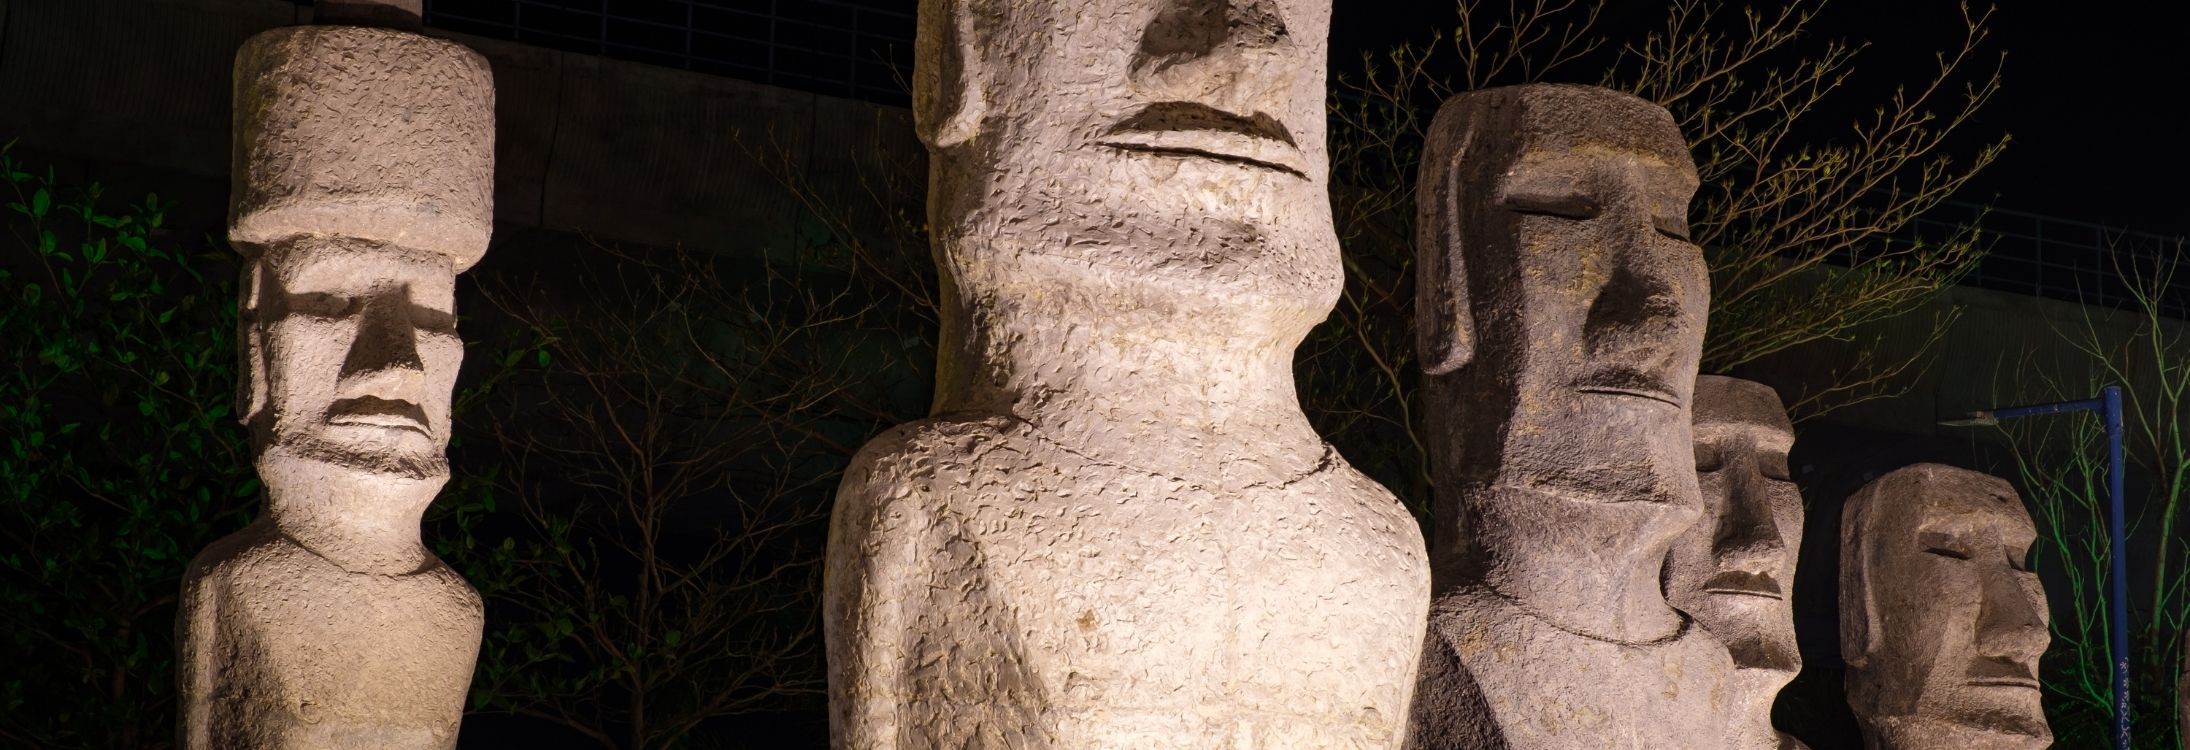 3. Moai statues, Easter Island